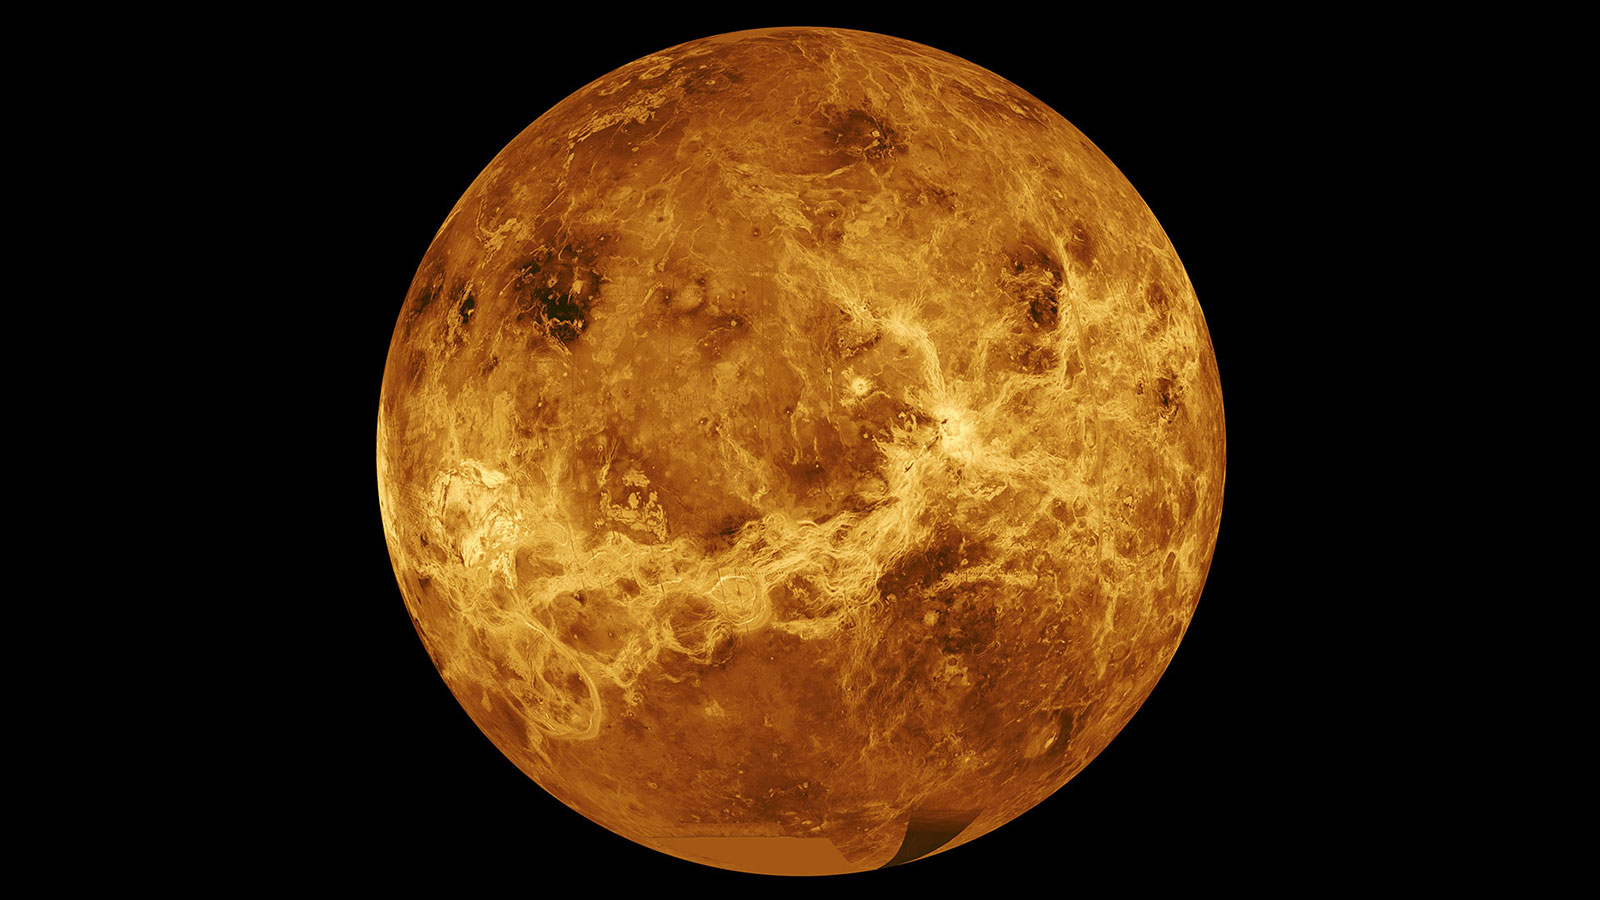 Orange brown planet Venus against the black backdrop of space.